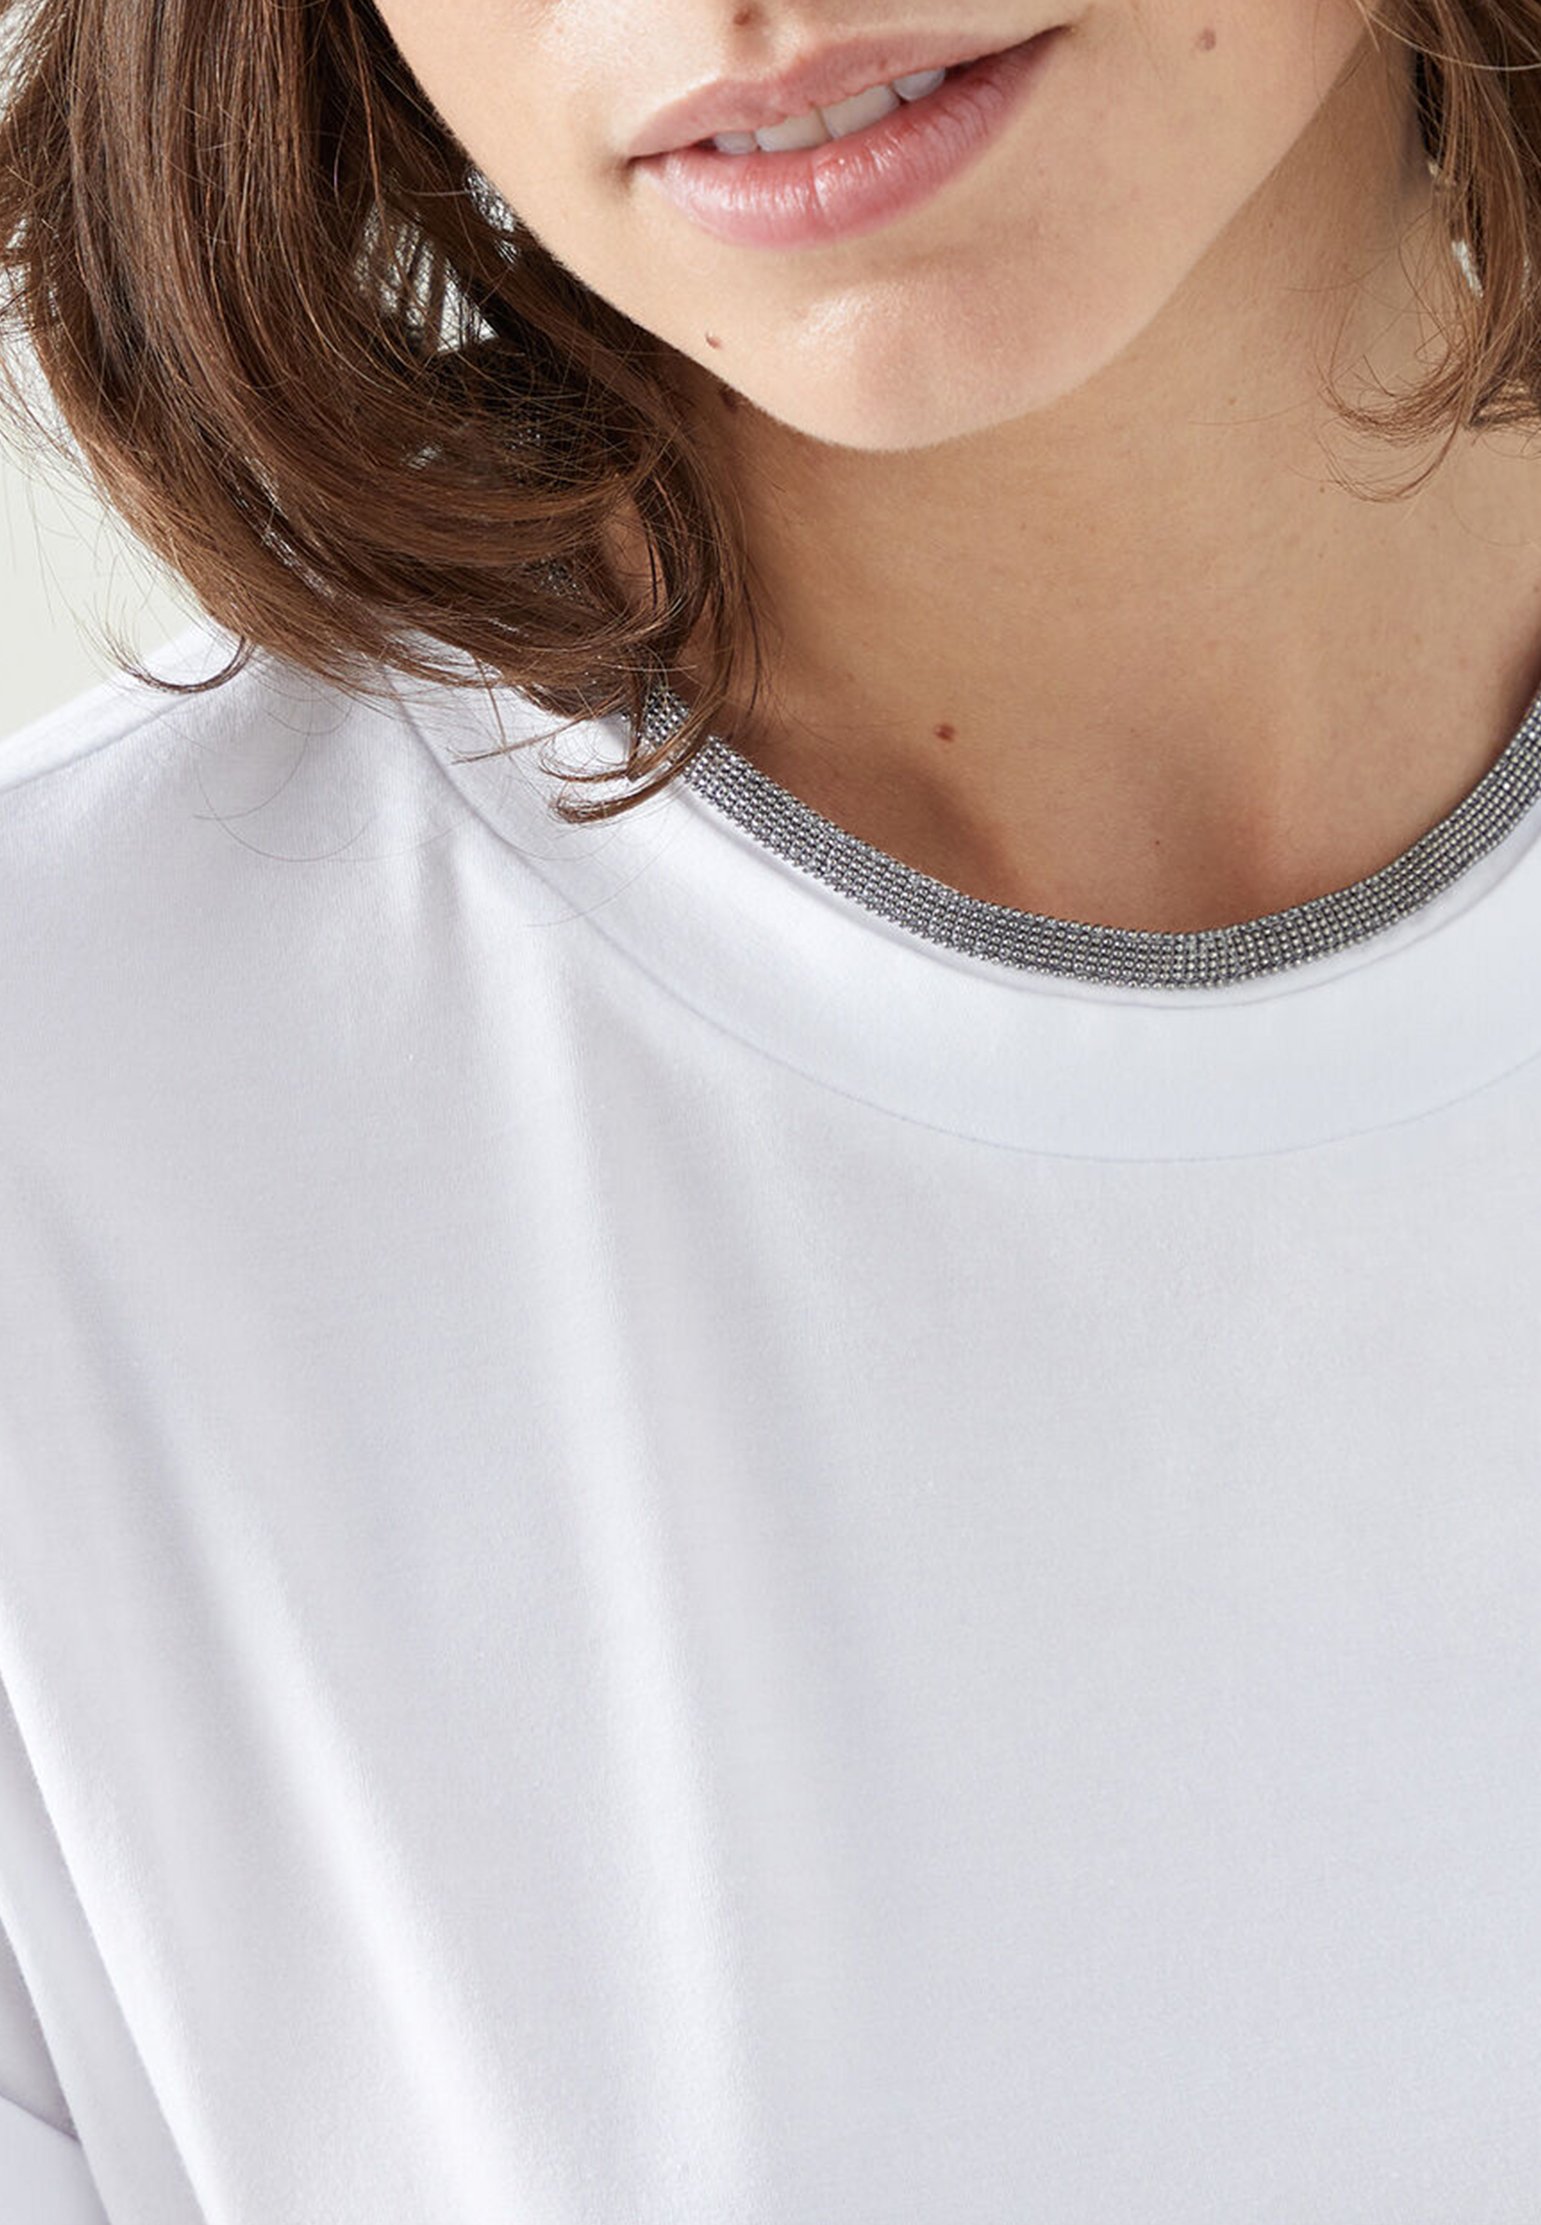 T-Shirt BRUNELLO CUCINELLI Color: white (Code: 888) in online store Allure